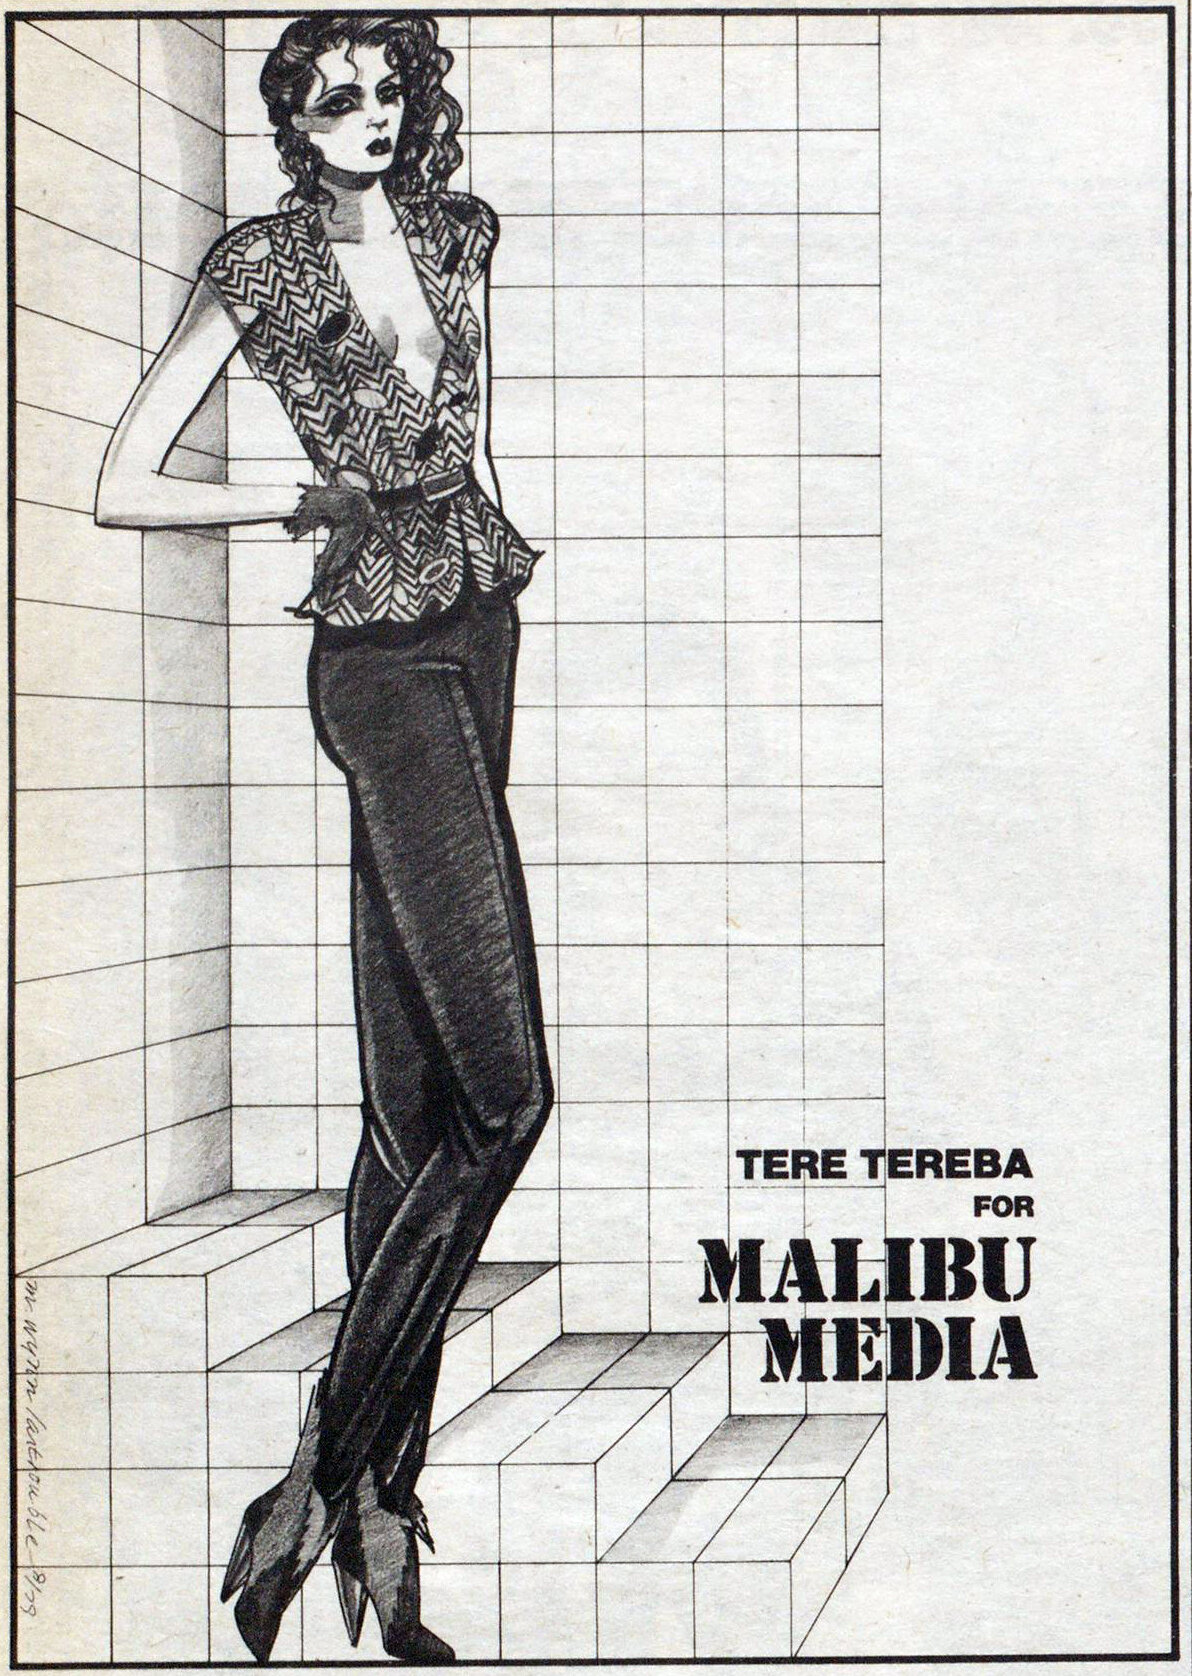 Malibu Media ad. WWD, August 22, 1979.